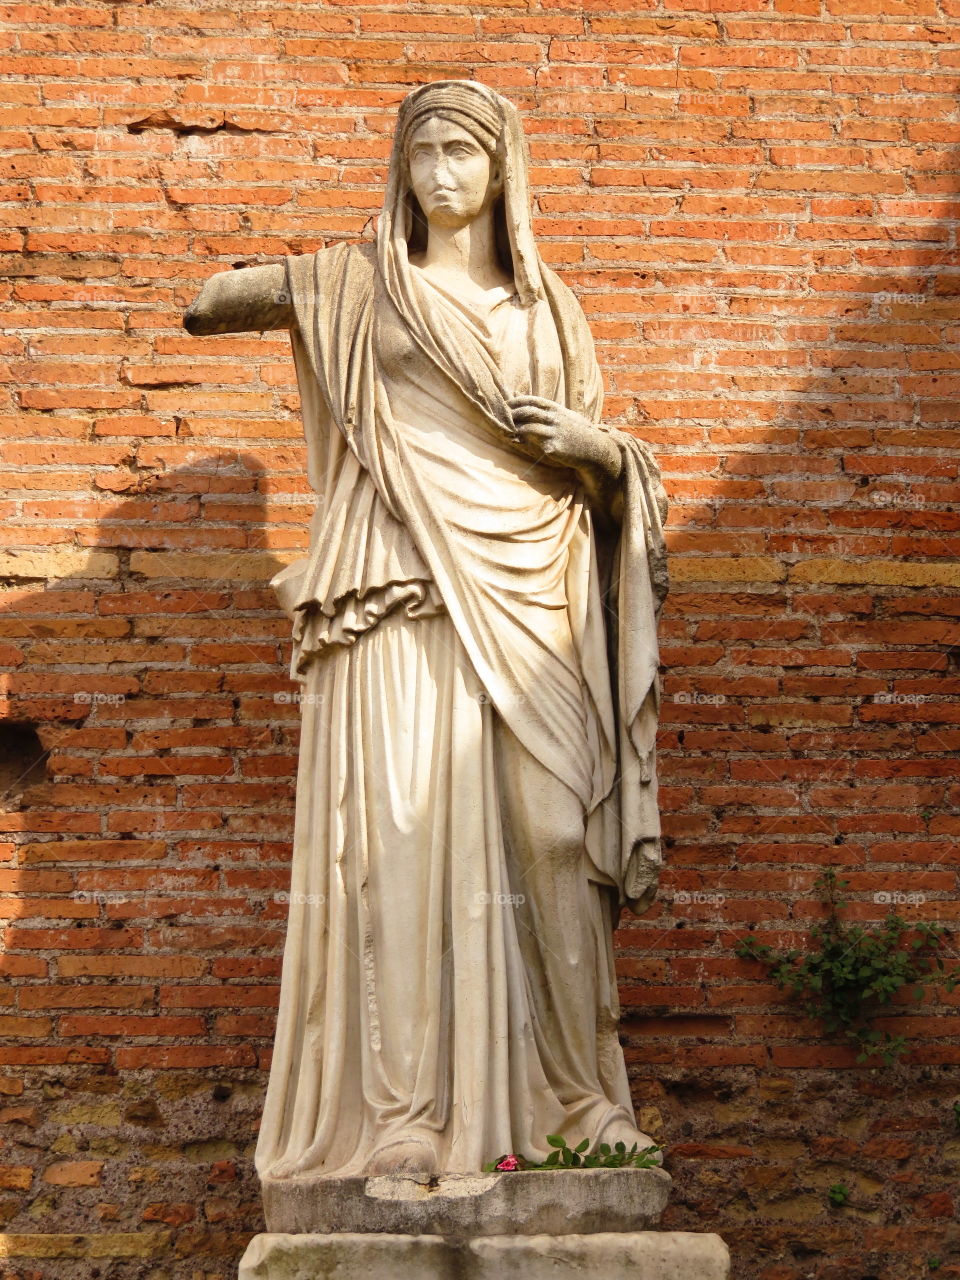 Roman vestal virgin